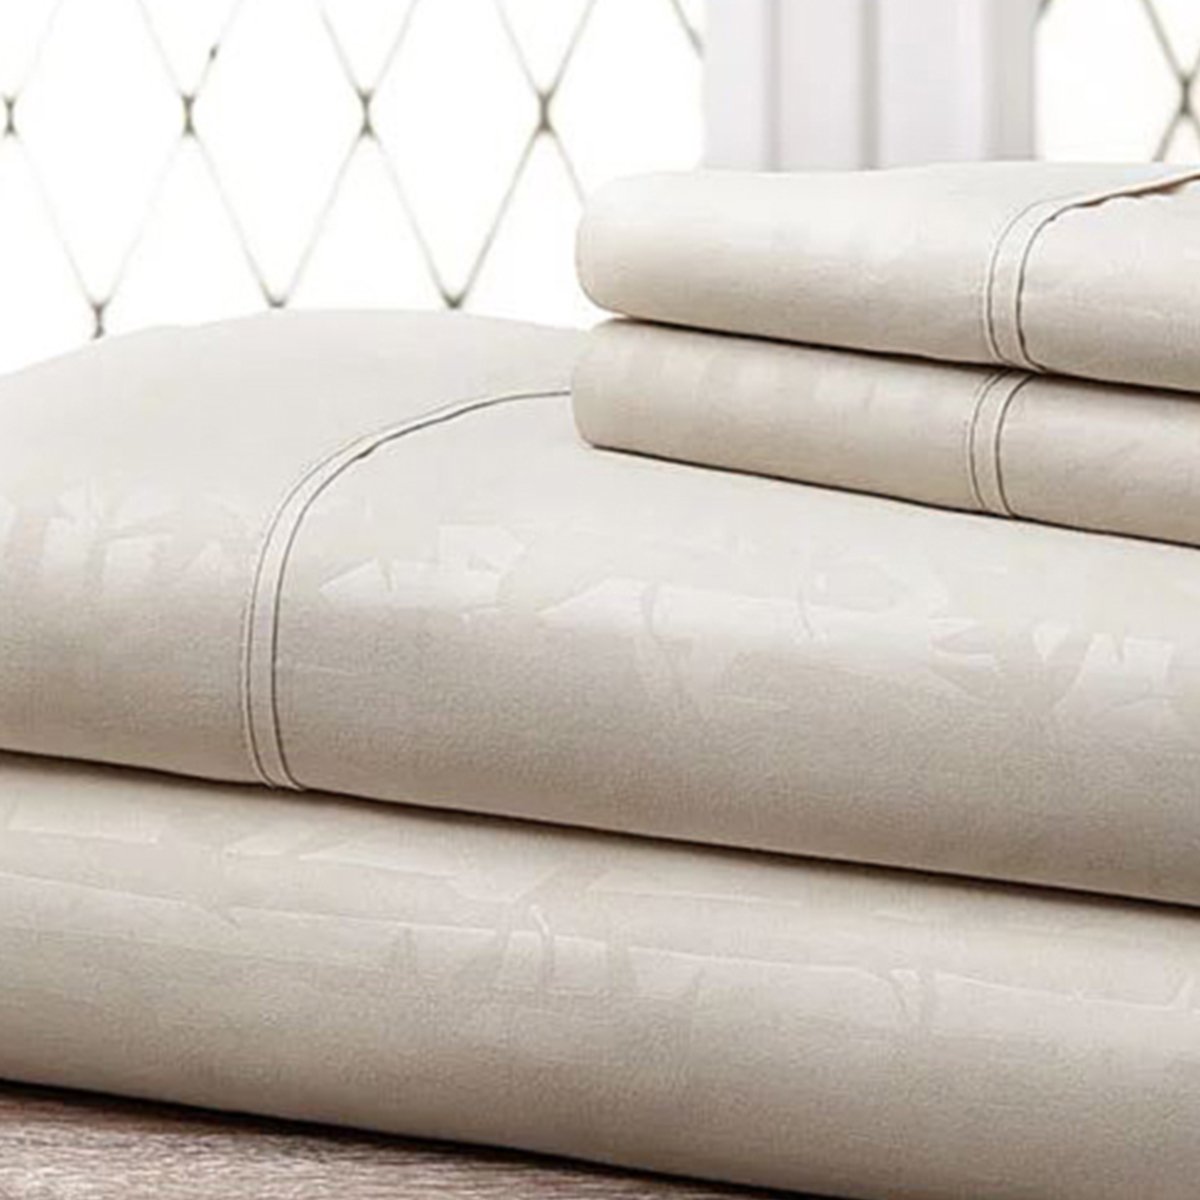 Hny-4pc-eb-bon-f Super-soft 1600 Series Bamboo Embossed Bed Sheet, Bone - Full, 4 Piece